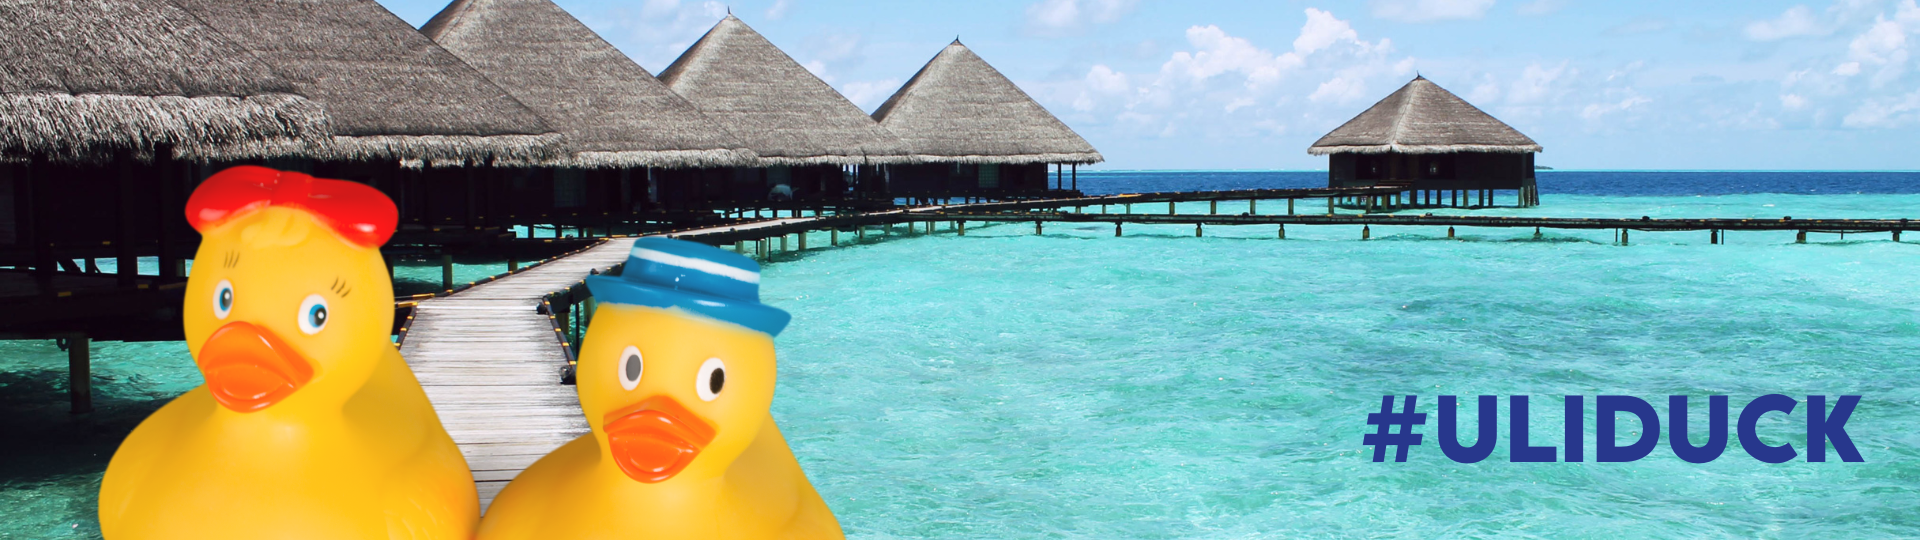 Vacation ducks